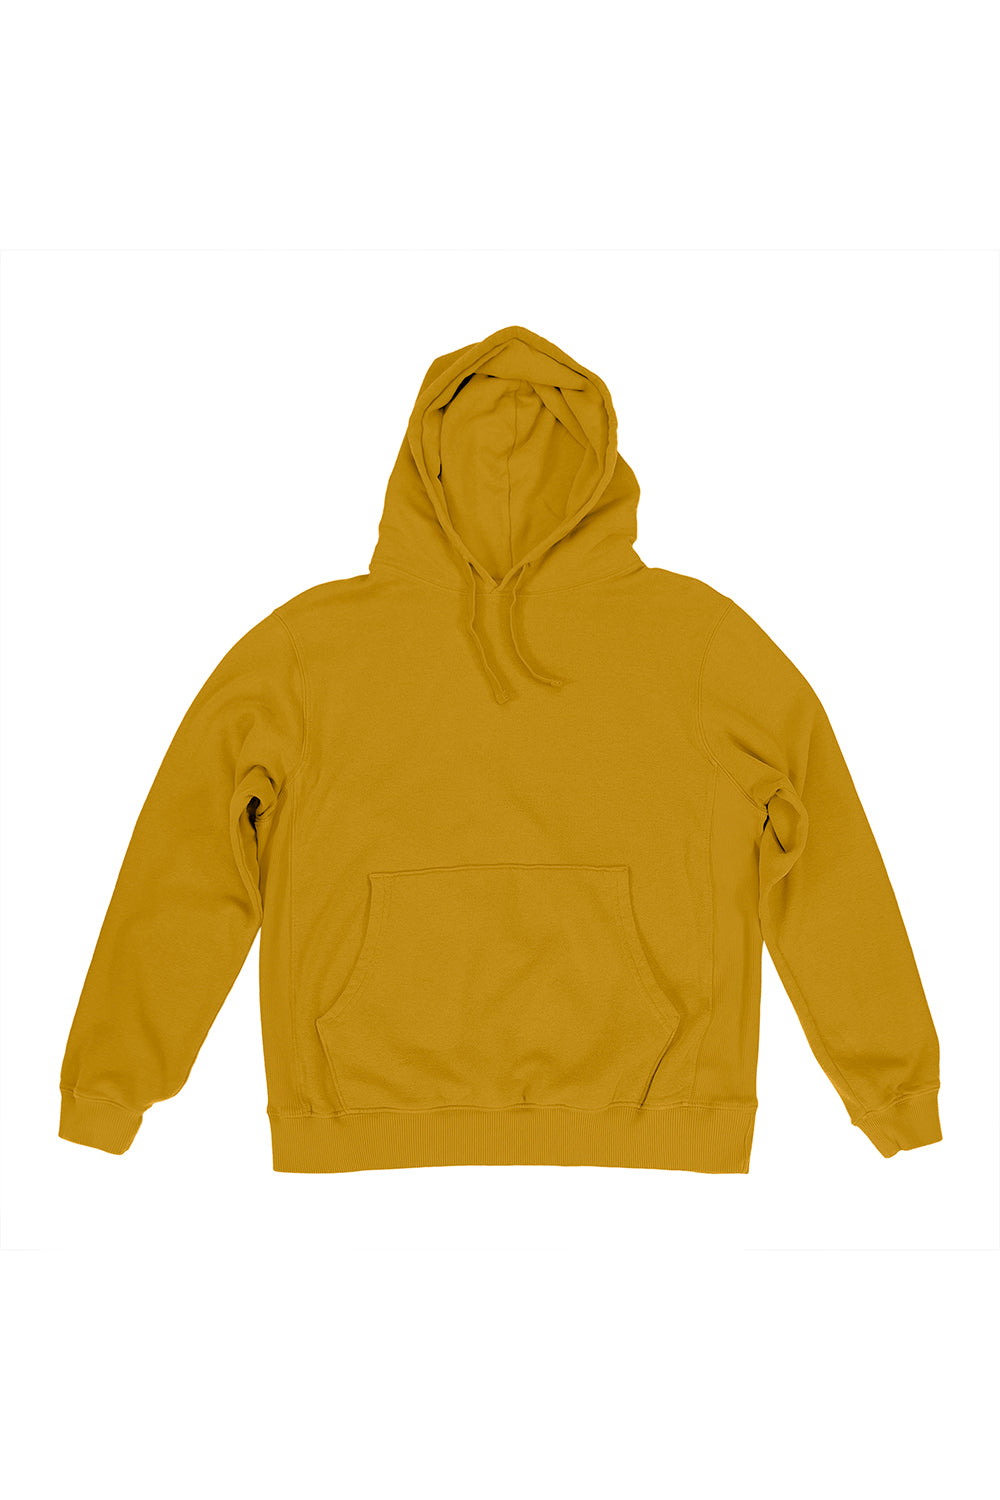 Montauk Hooded Sweatshirt | Jungmaven Hemp Clothing & Accessories / Color: Spicy Mustard